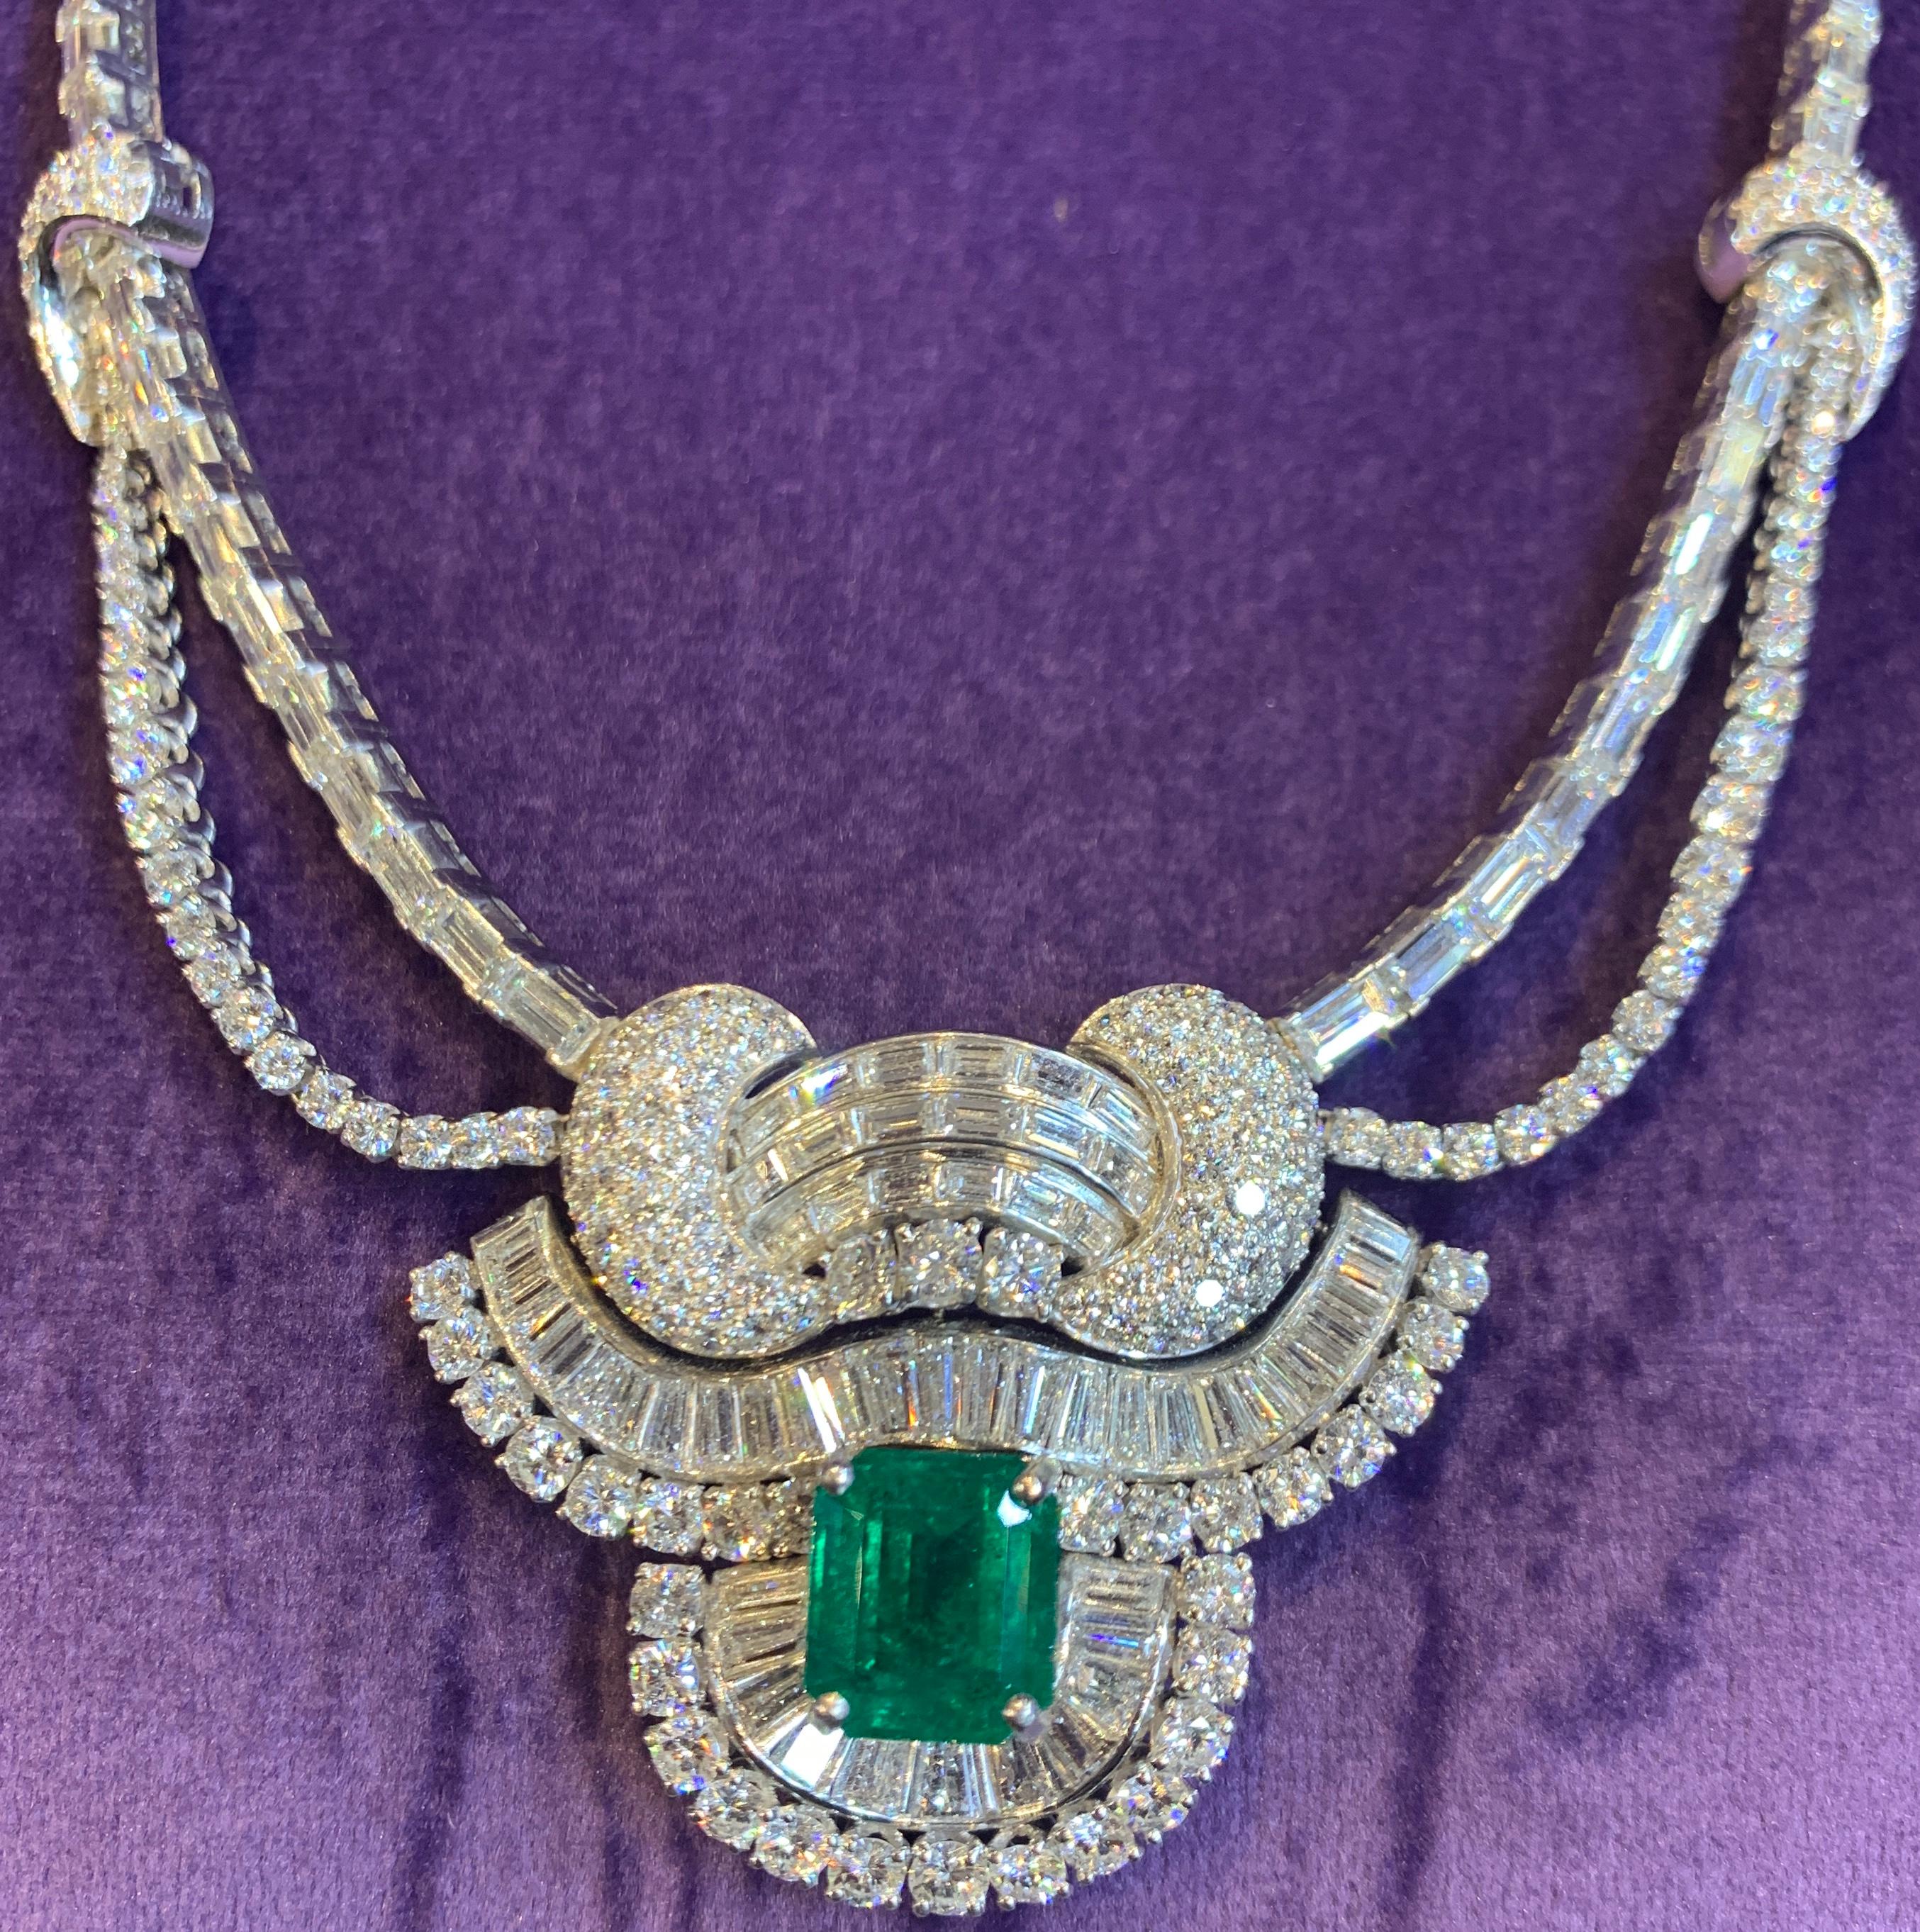 Emerald & Diamond Necklace
Gold Type: Platinum
Emerald Weight: Approx 5.48 Cts
Diamond Weight Approx: 26.00 Cts
Measurements: 14.5